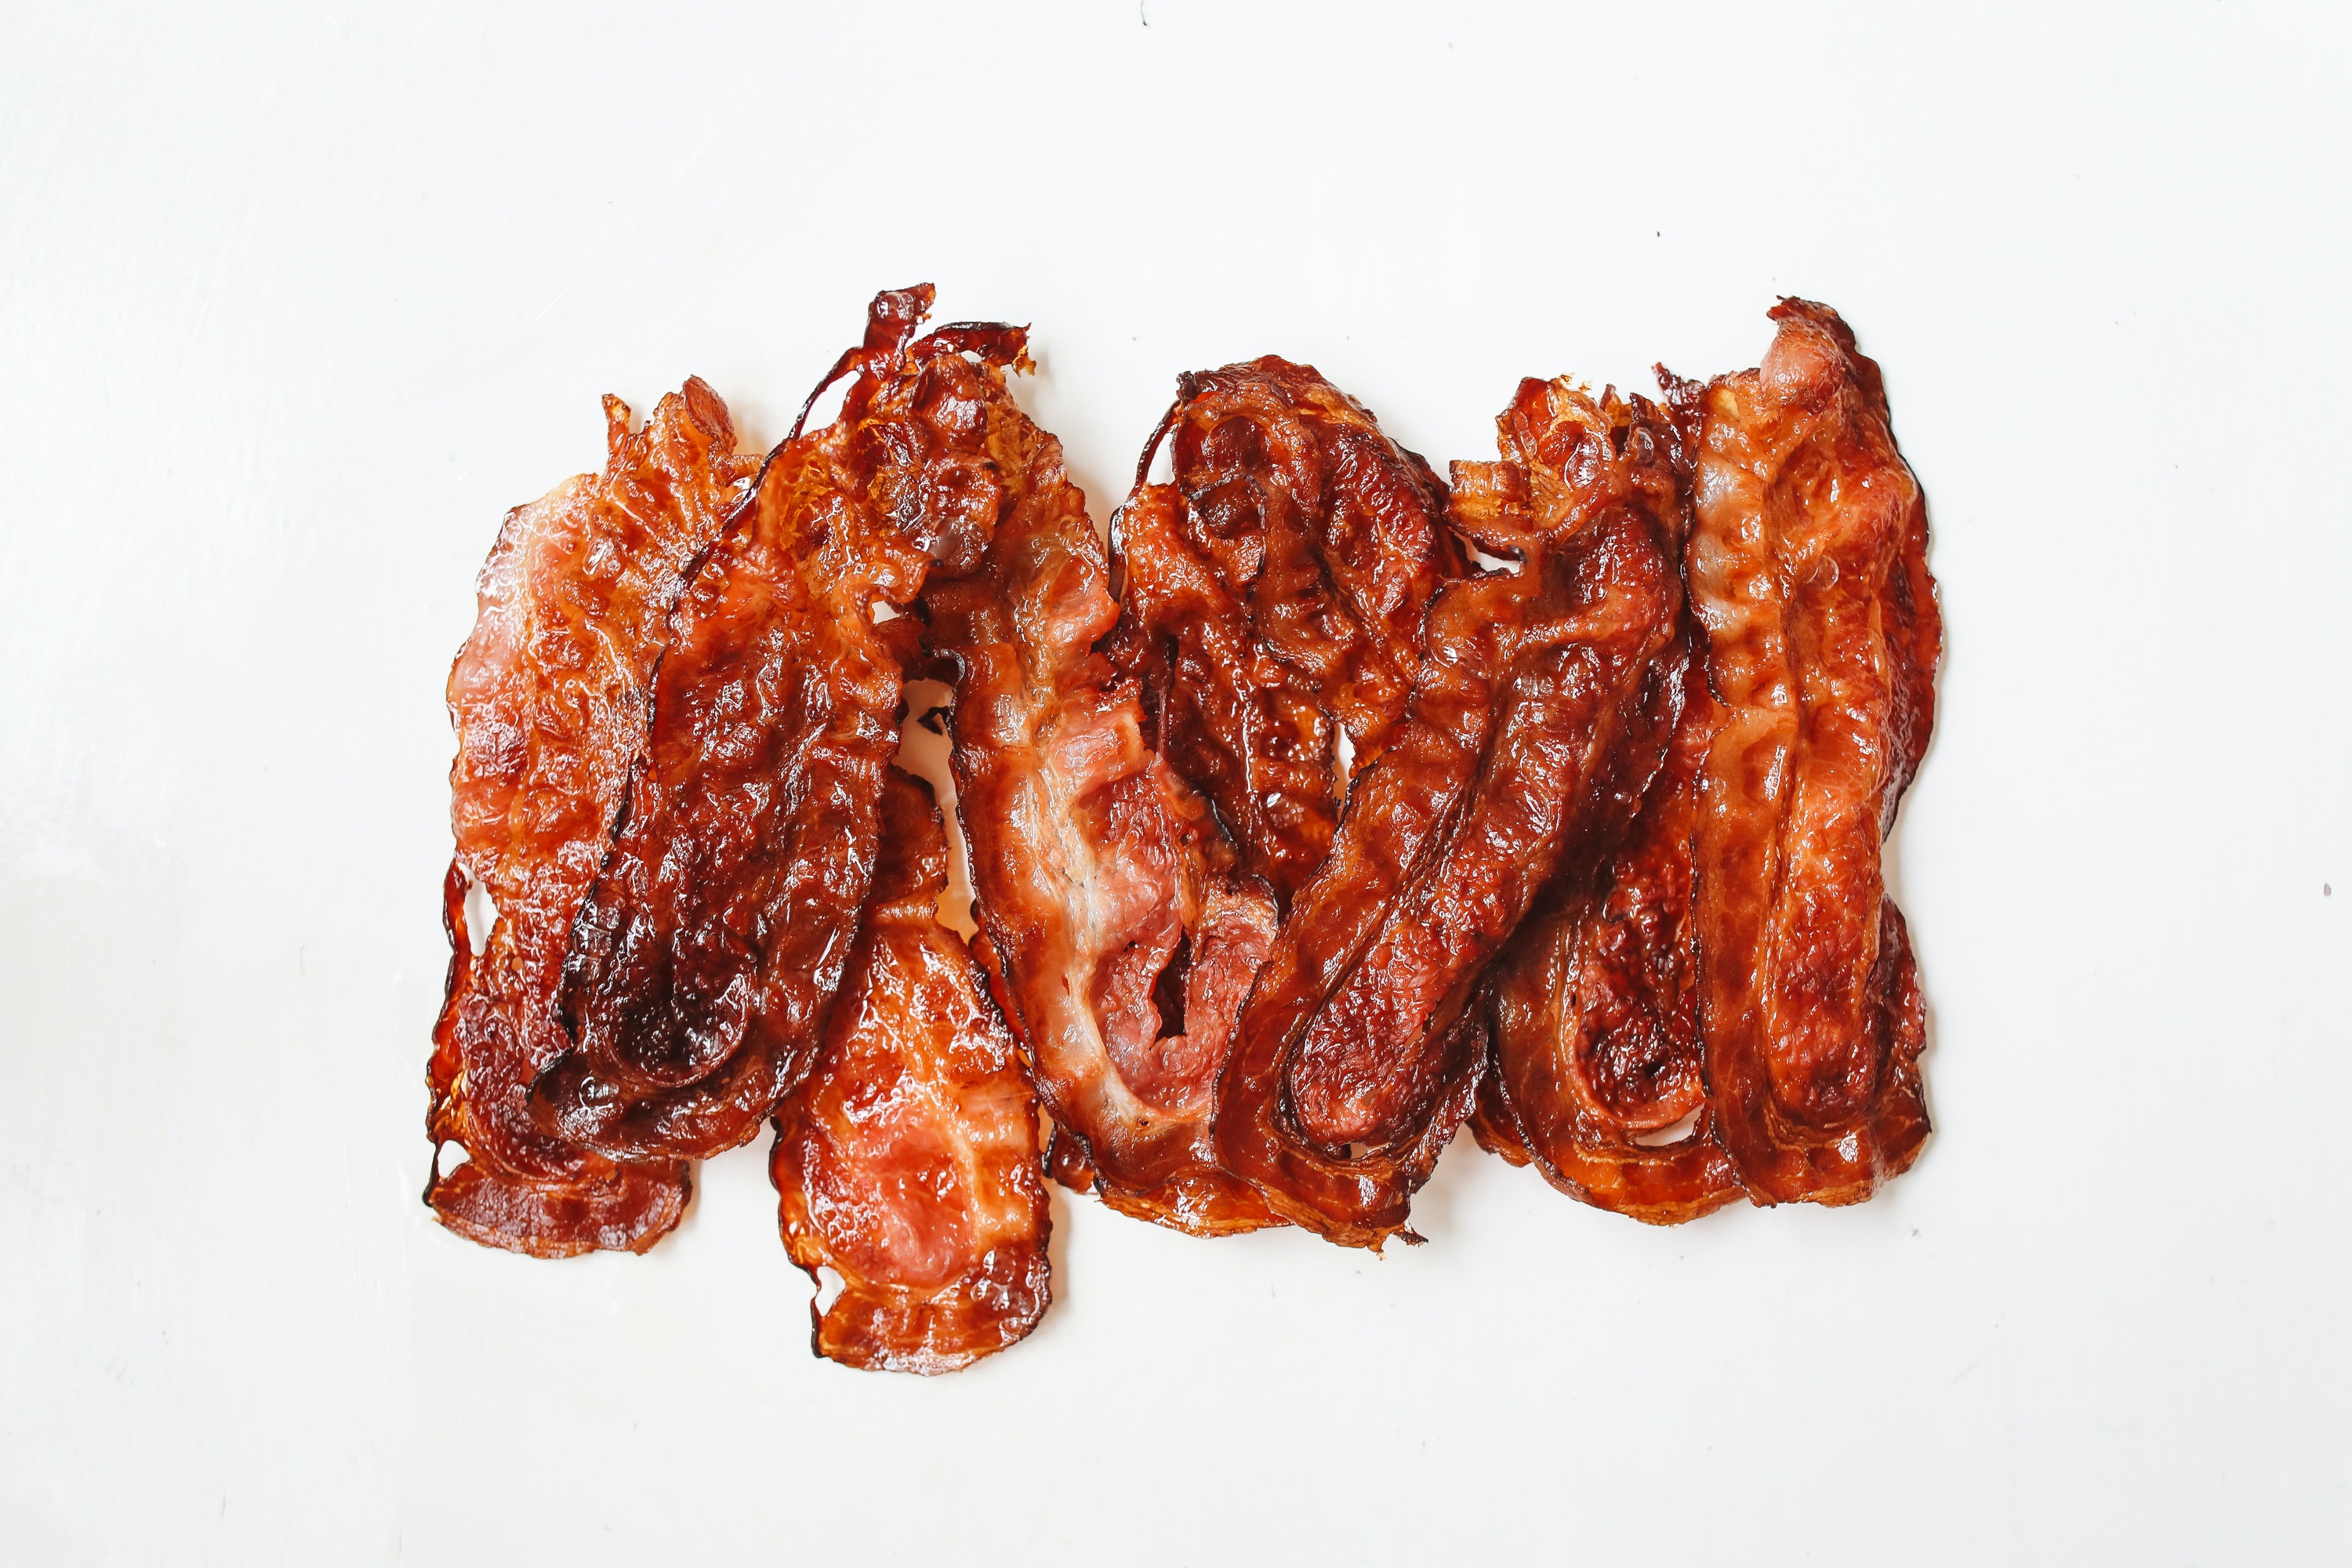 How Do You Air Fry Bacon